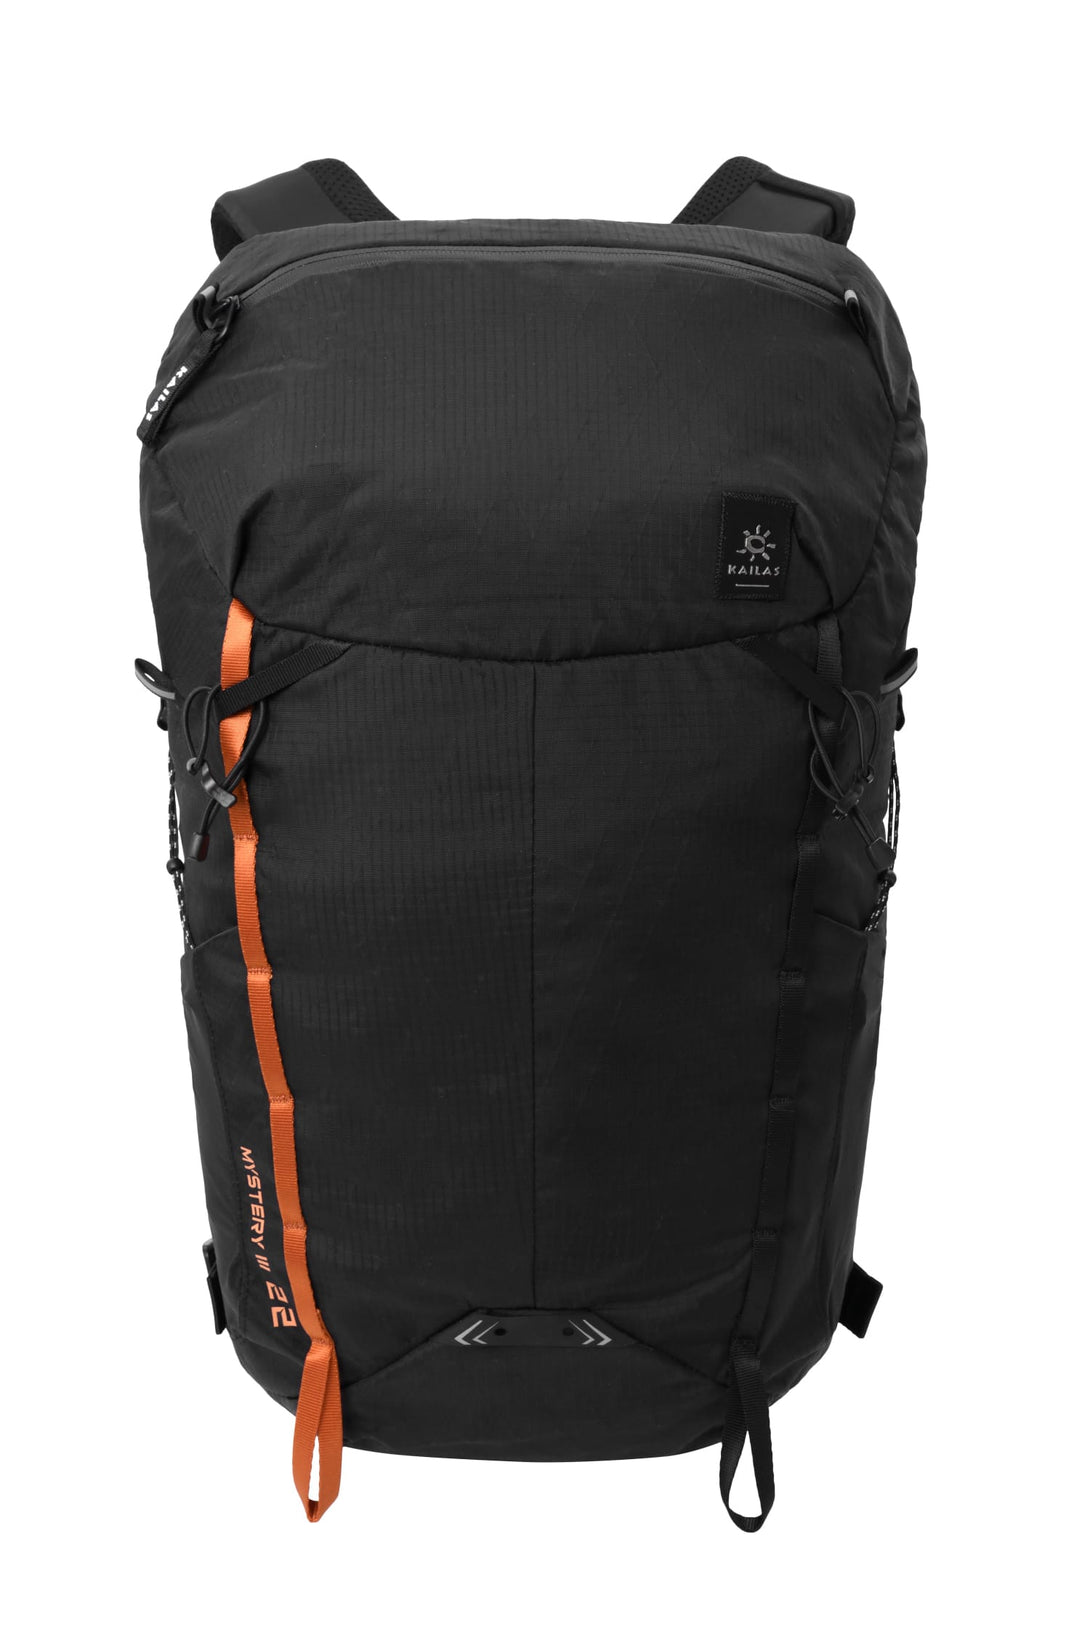 Kailas Mystery III Unisex Lightweight Trekking Backpack Hiking Daypack 22L